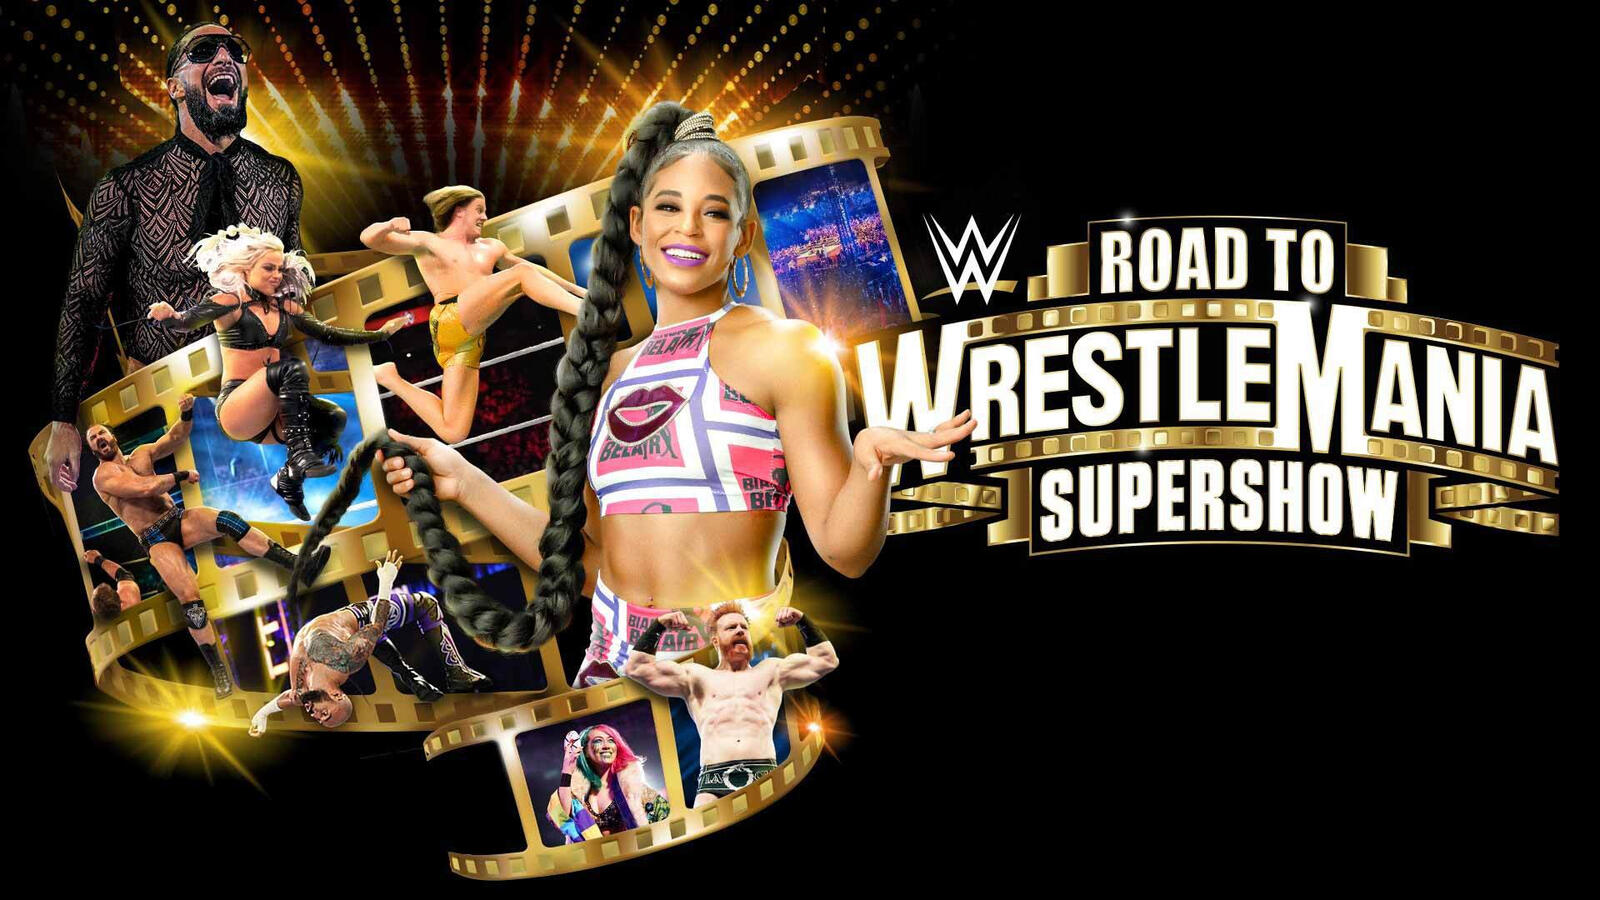 Cobertura: WWE Road to WrestleMania SuperShow In Pensacola – Adrenalina na alma!